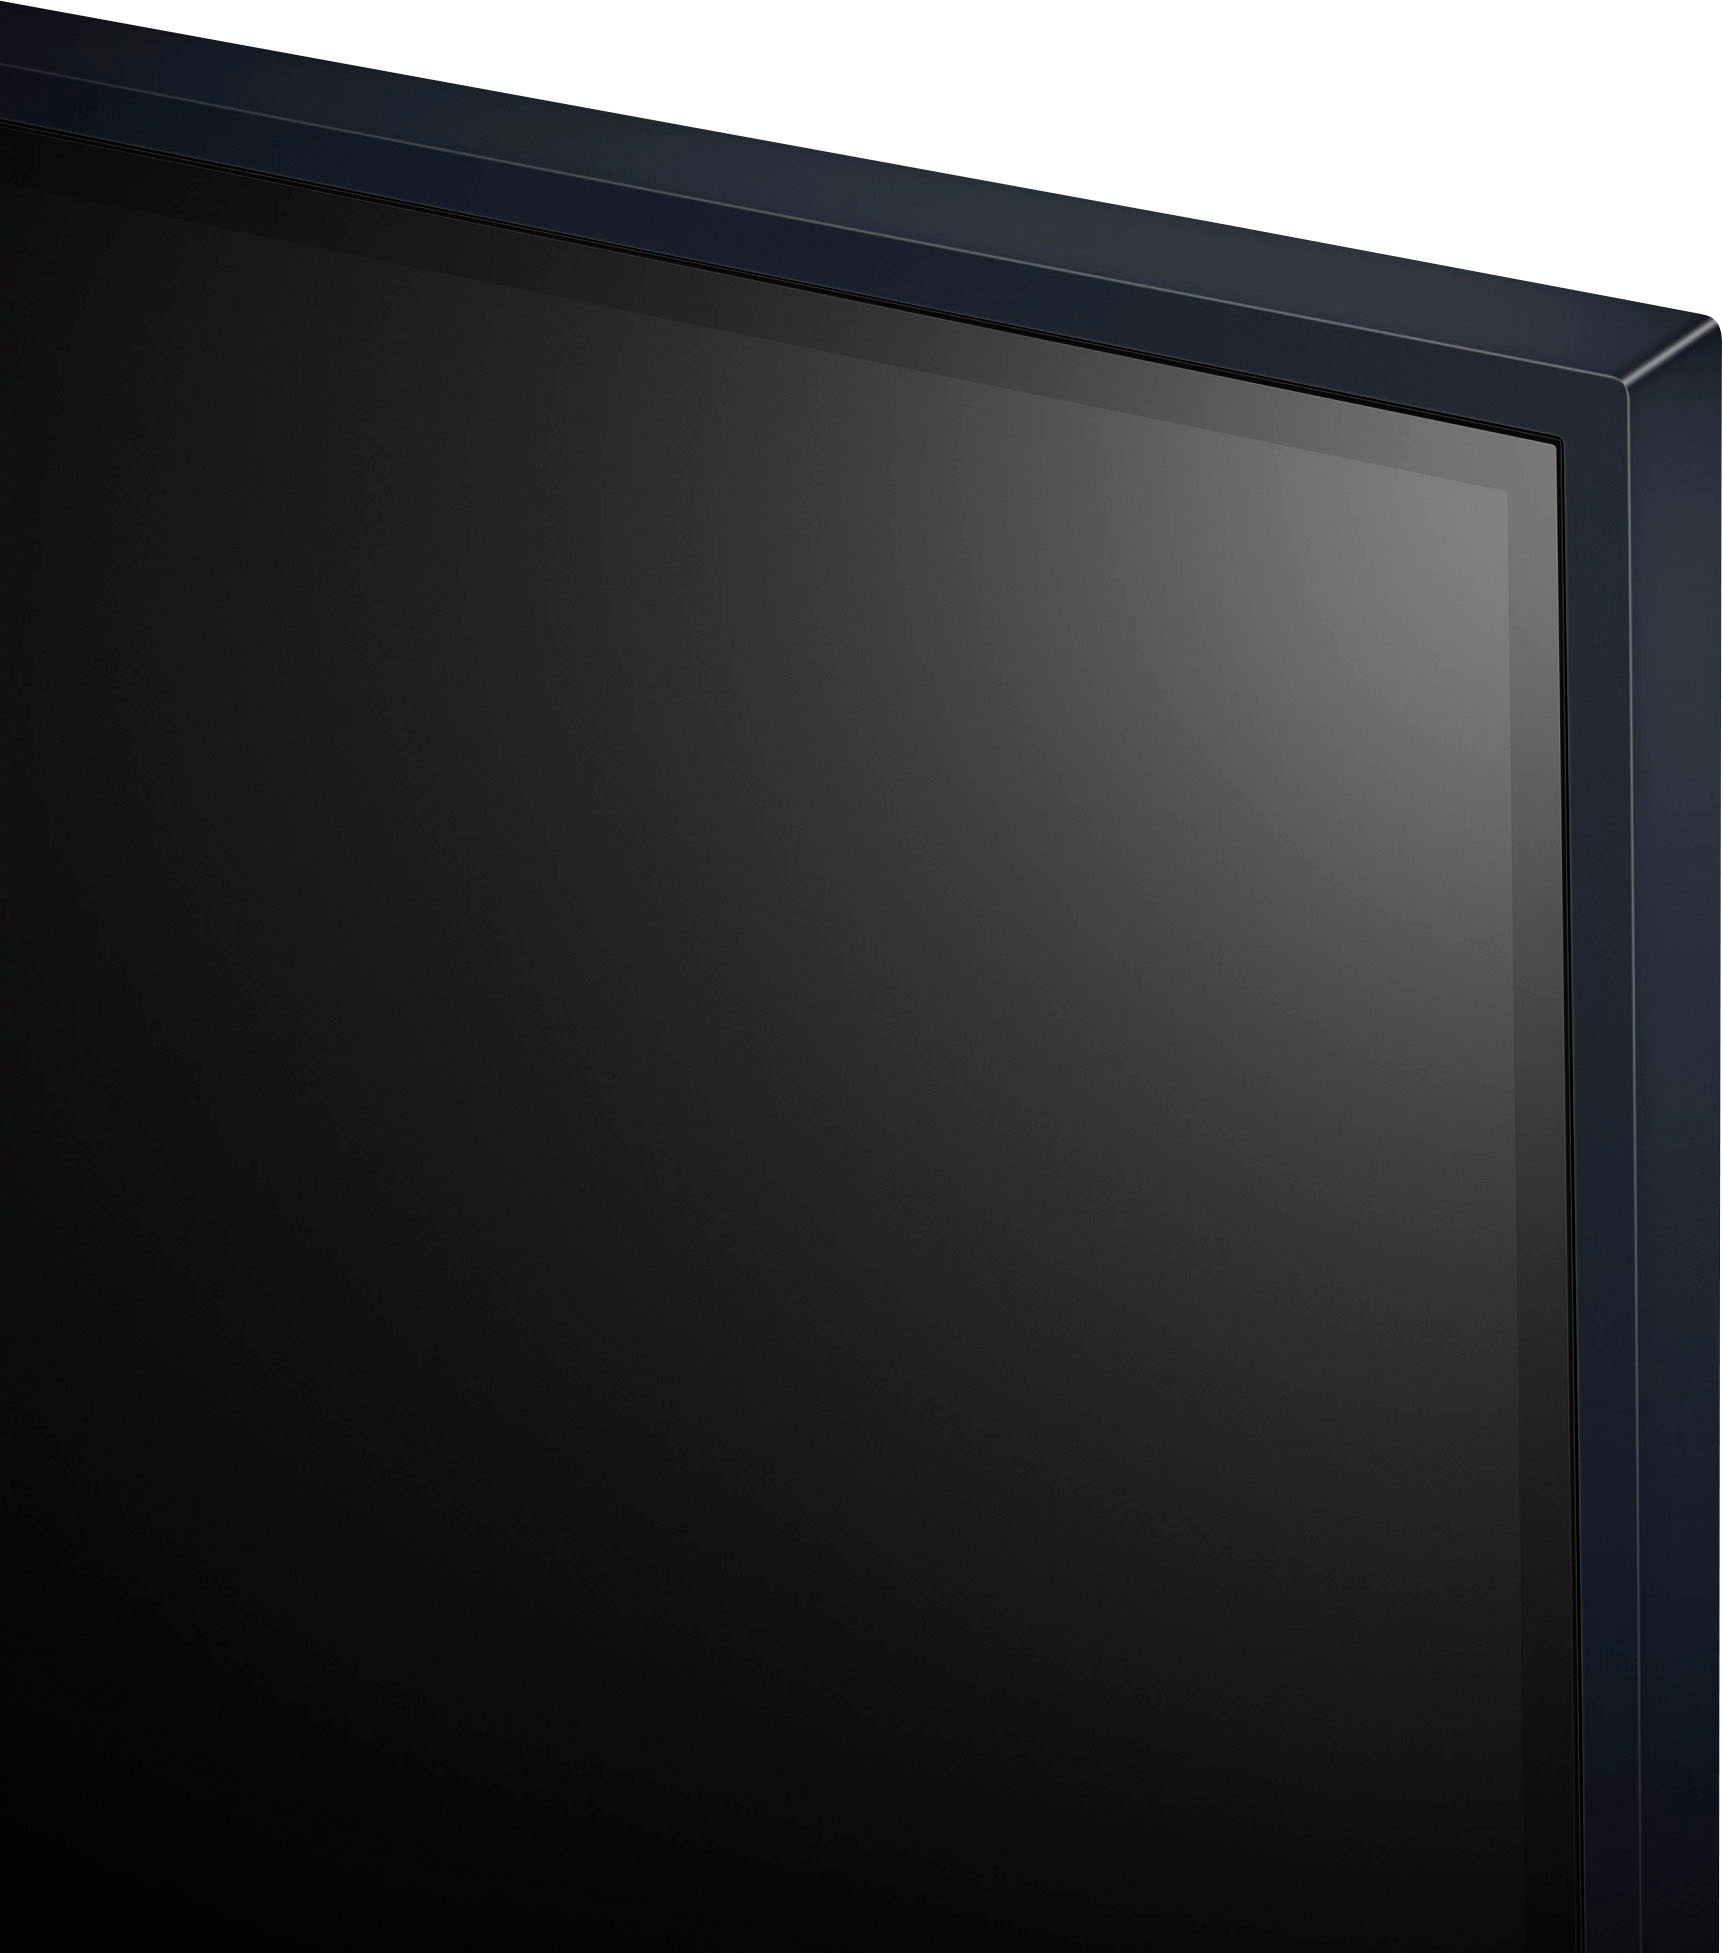 LG 55” Class UR9000 Series LED 4K UHD Smart webOS TV 55UR9000PUA - Best Buy